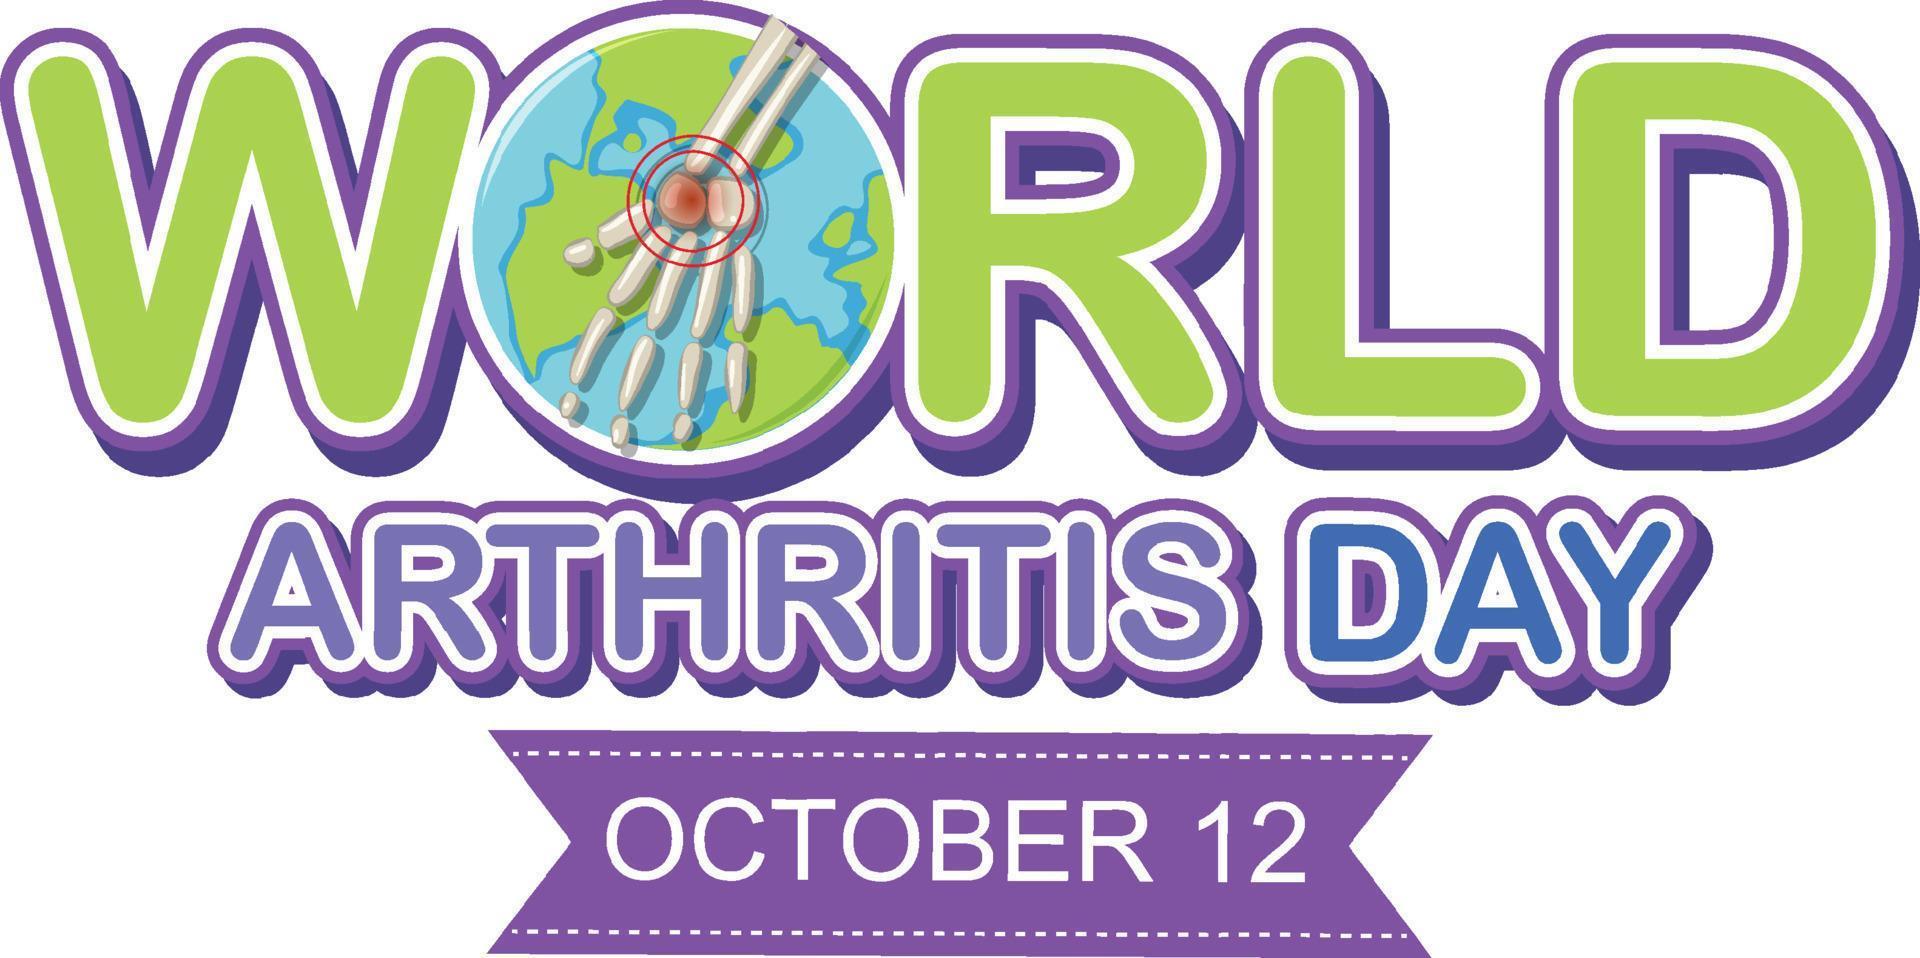 World Arthritis Day Poster Design vector